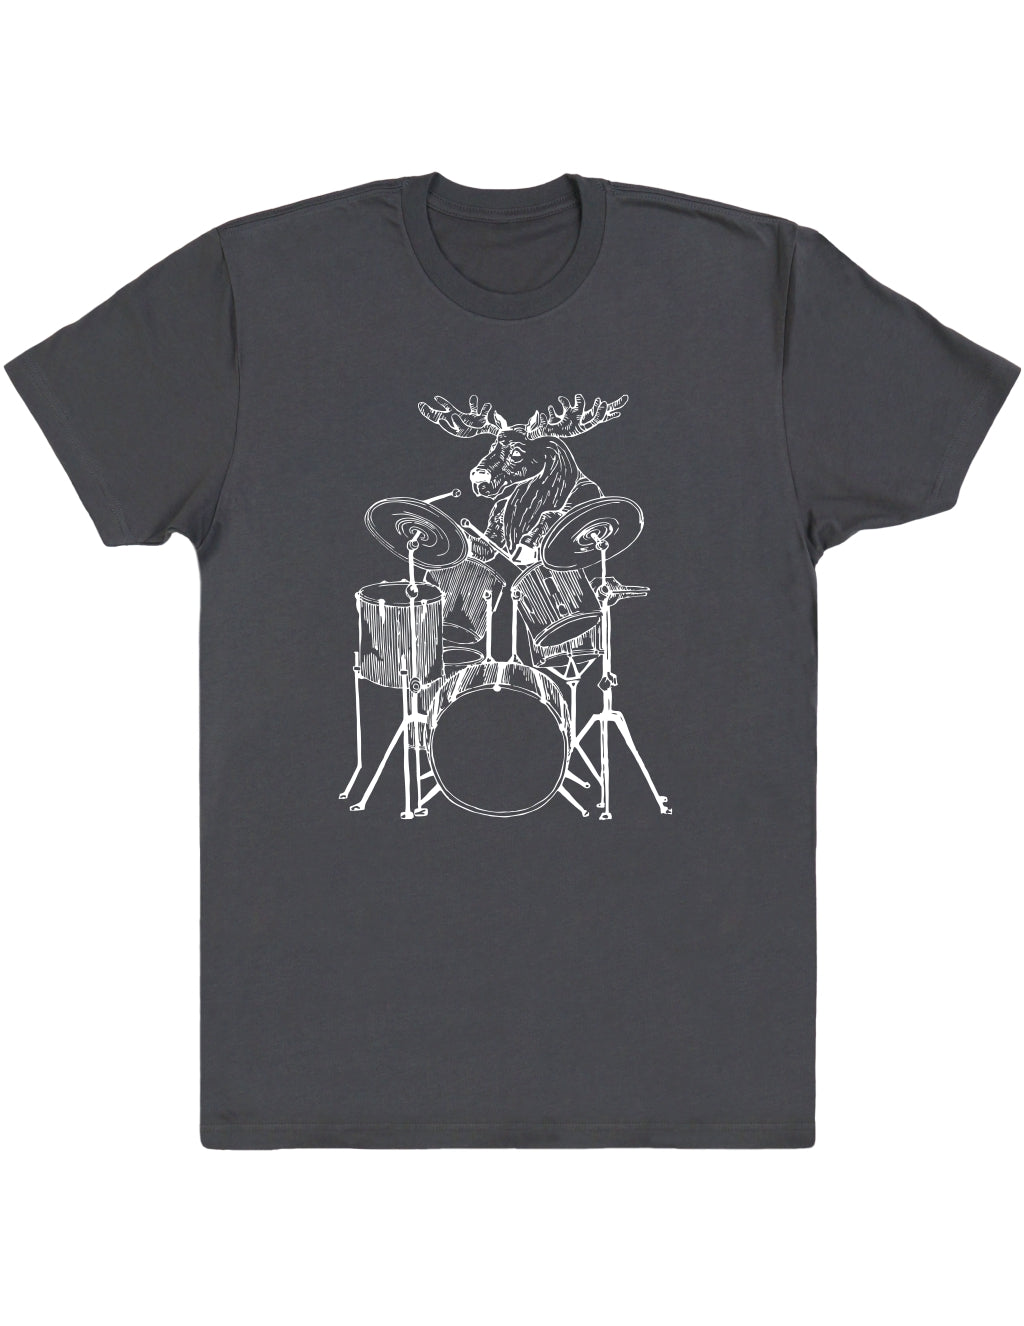 SEEMBO Moose Playing Drums Men's Cotton T-Shirt